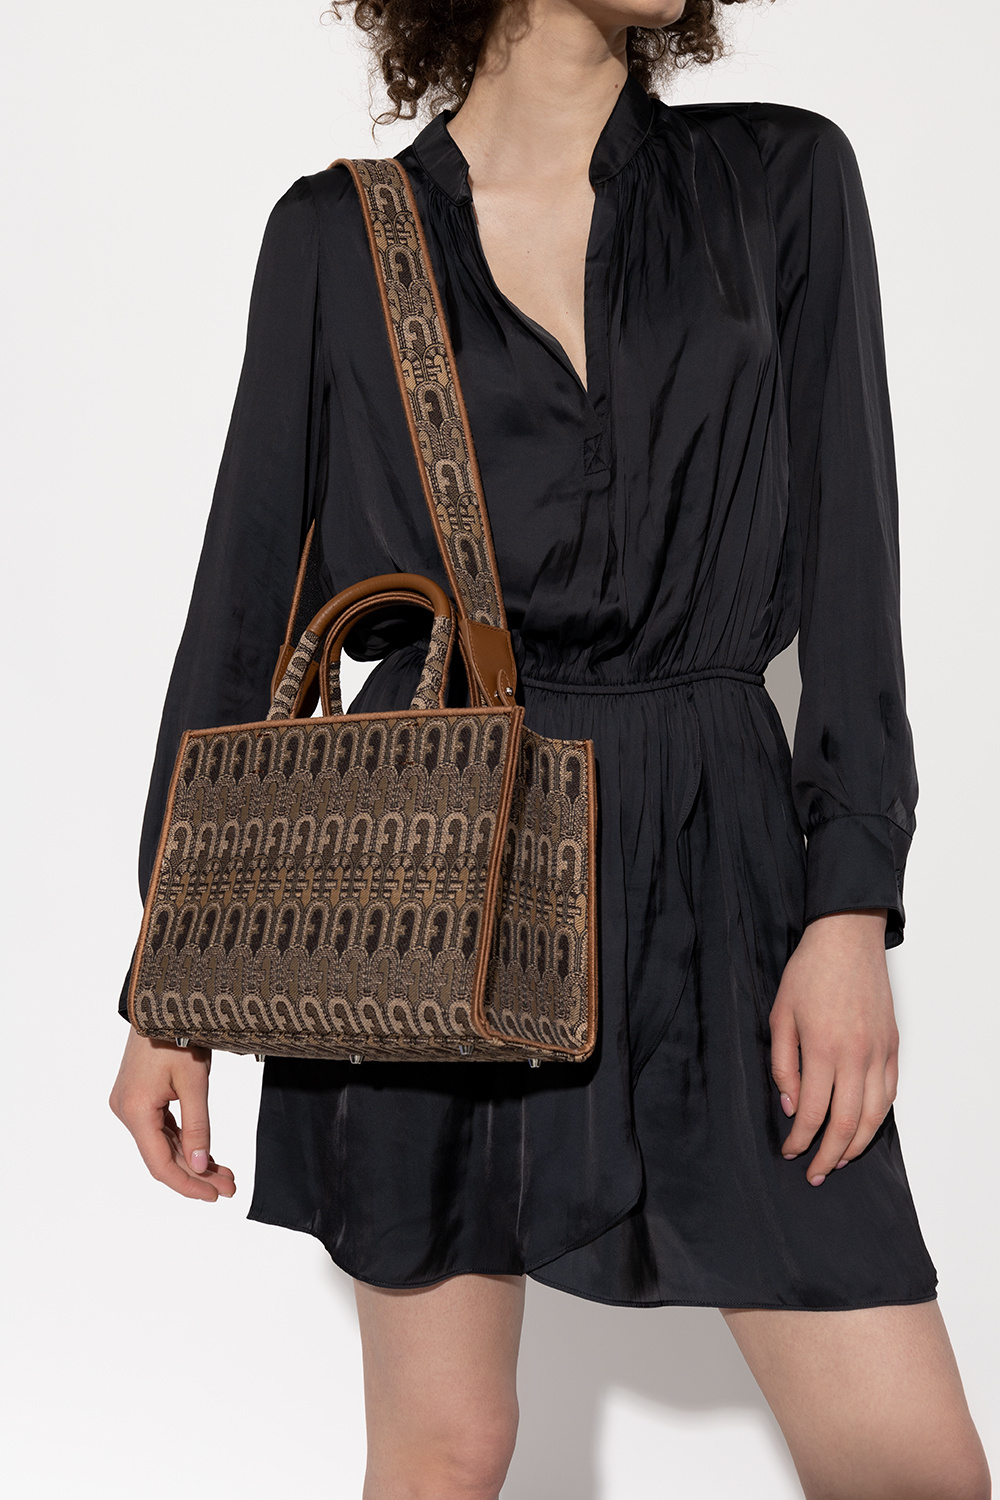 Furla ‘Opportunity Small’ shopper Originals bag